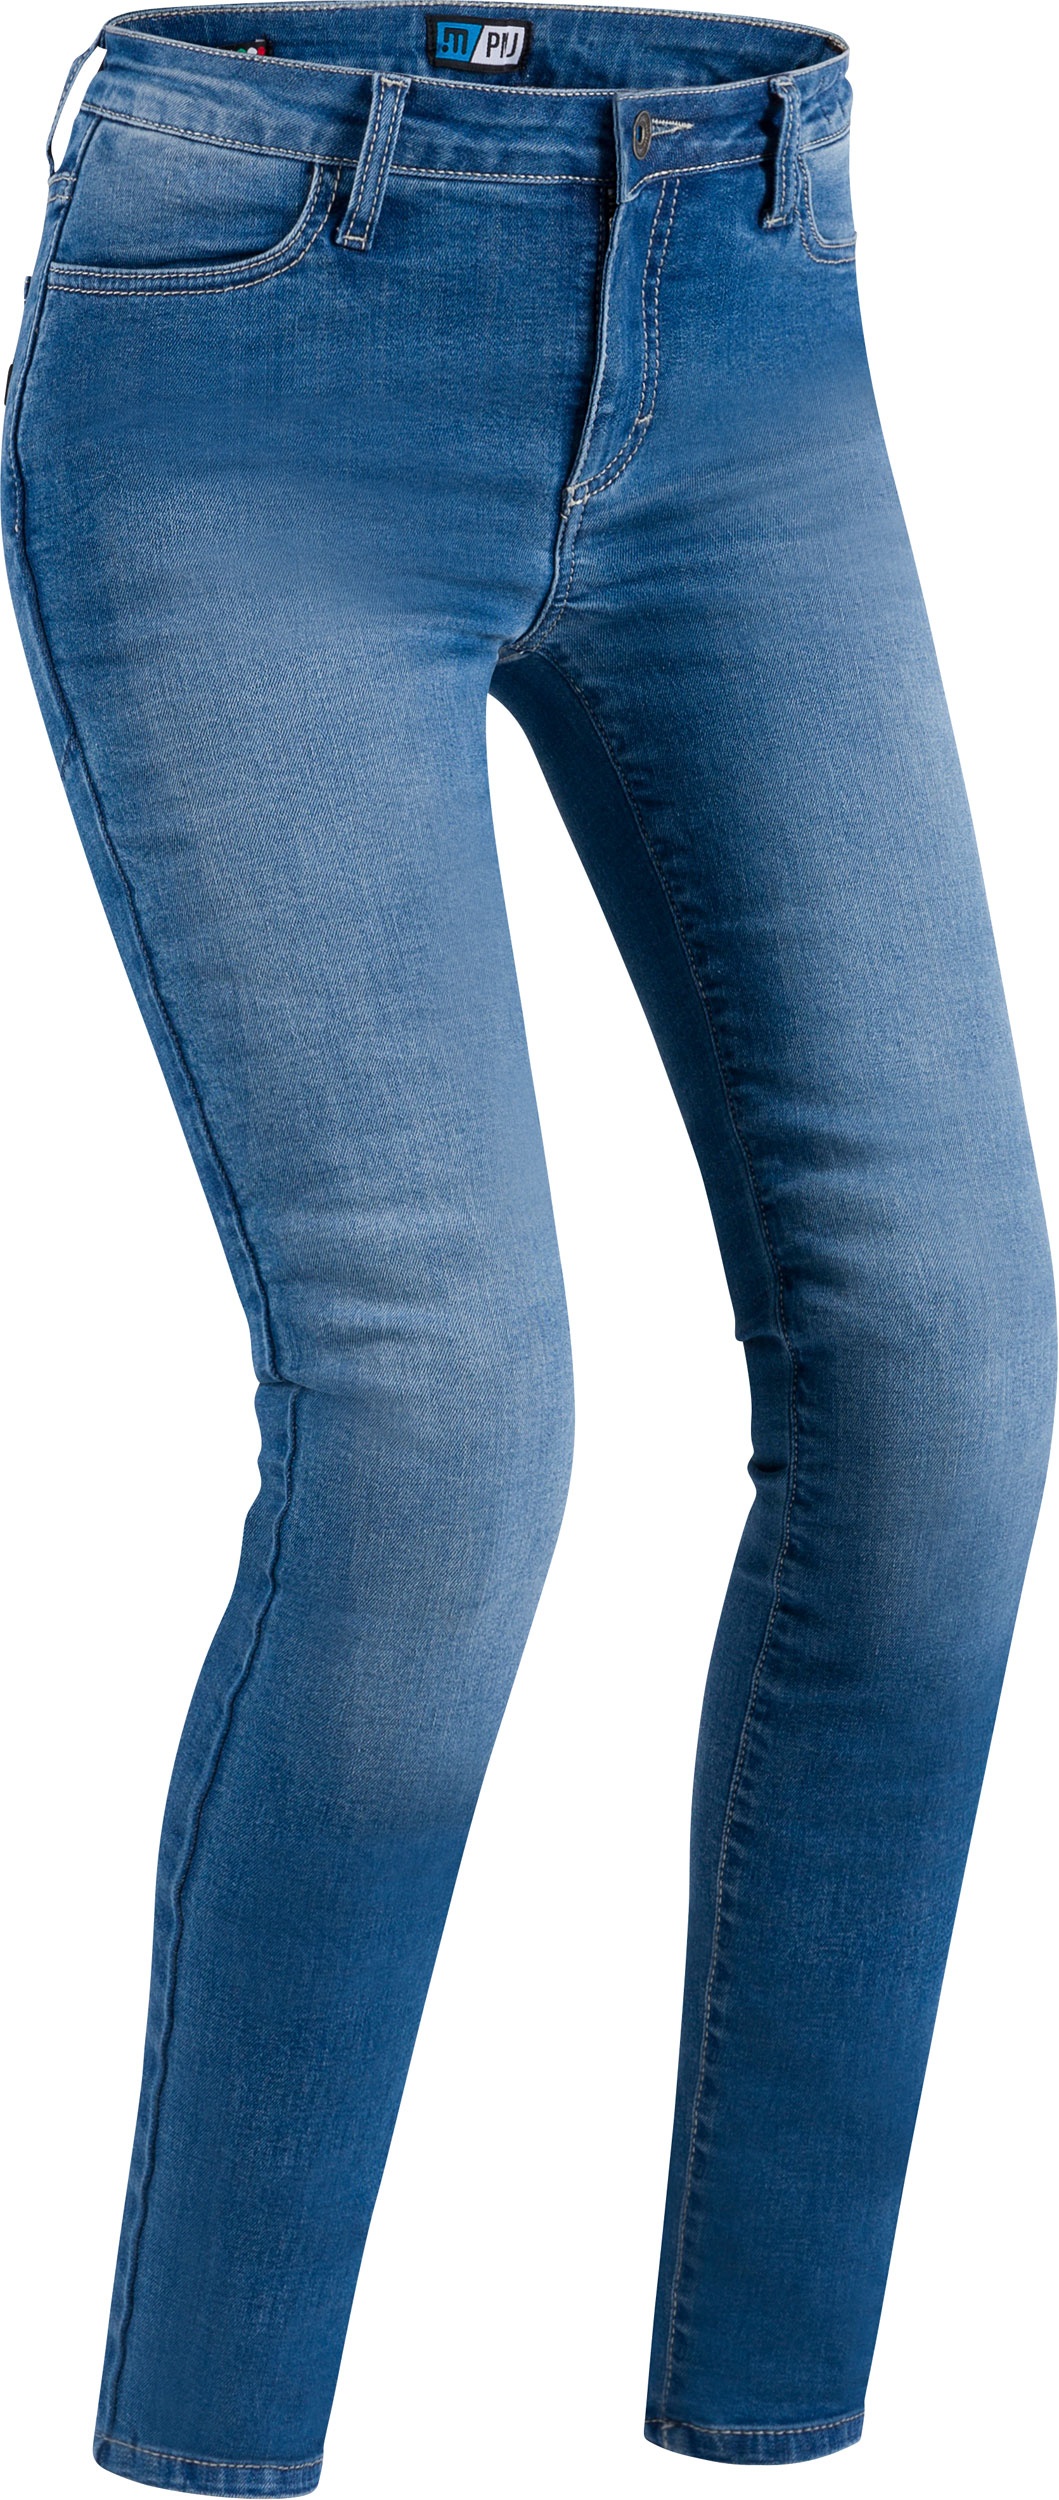 PMJ Skinny, femmes jeans - Bleu - 28